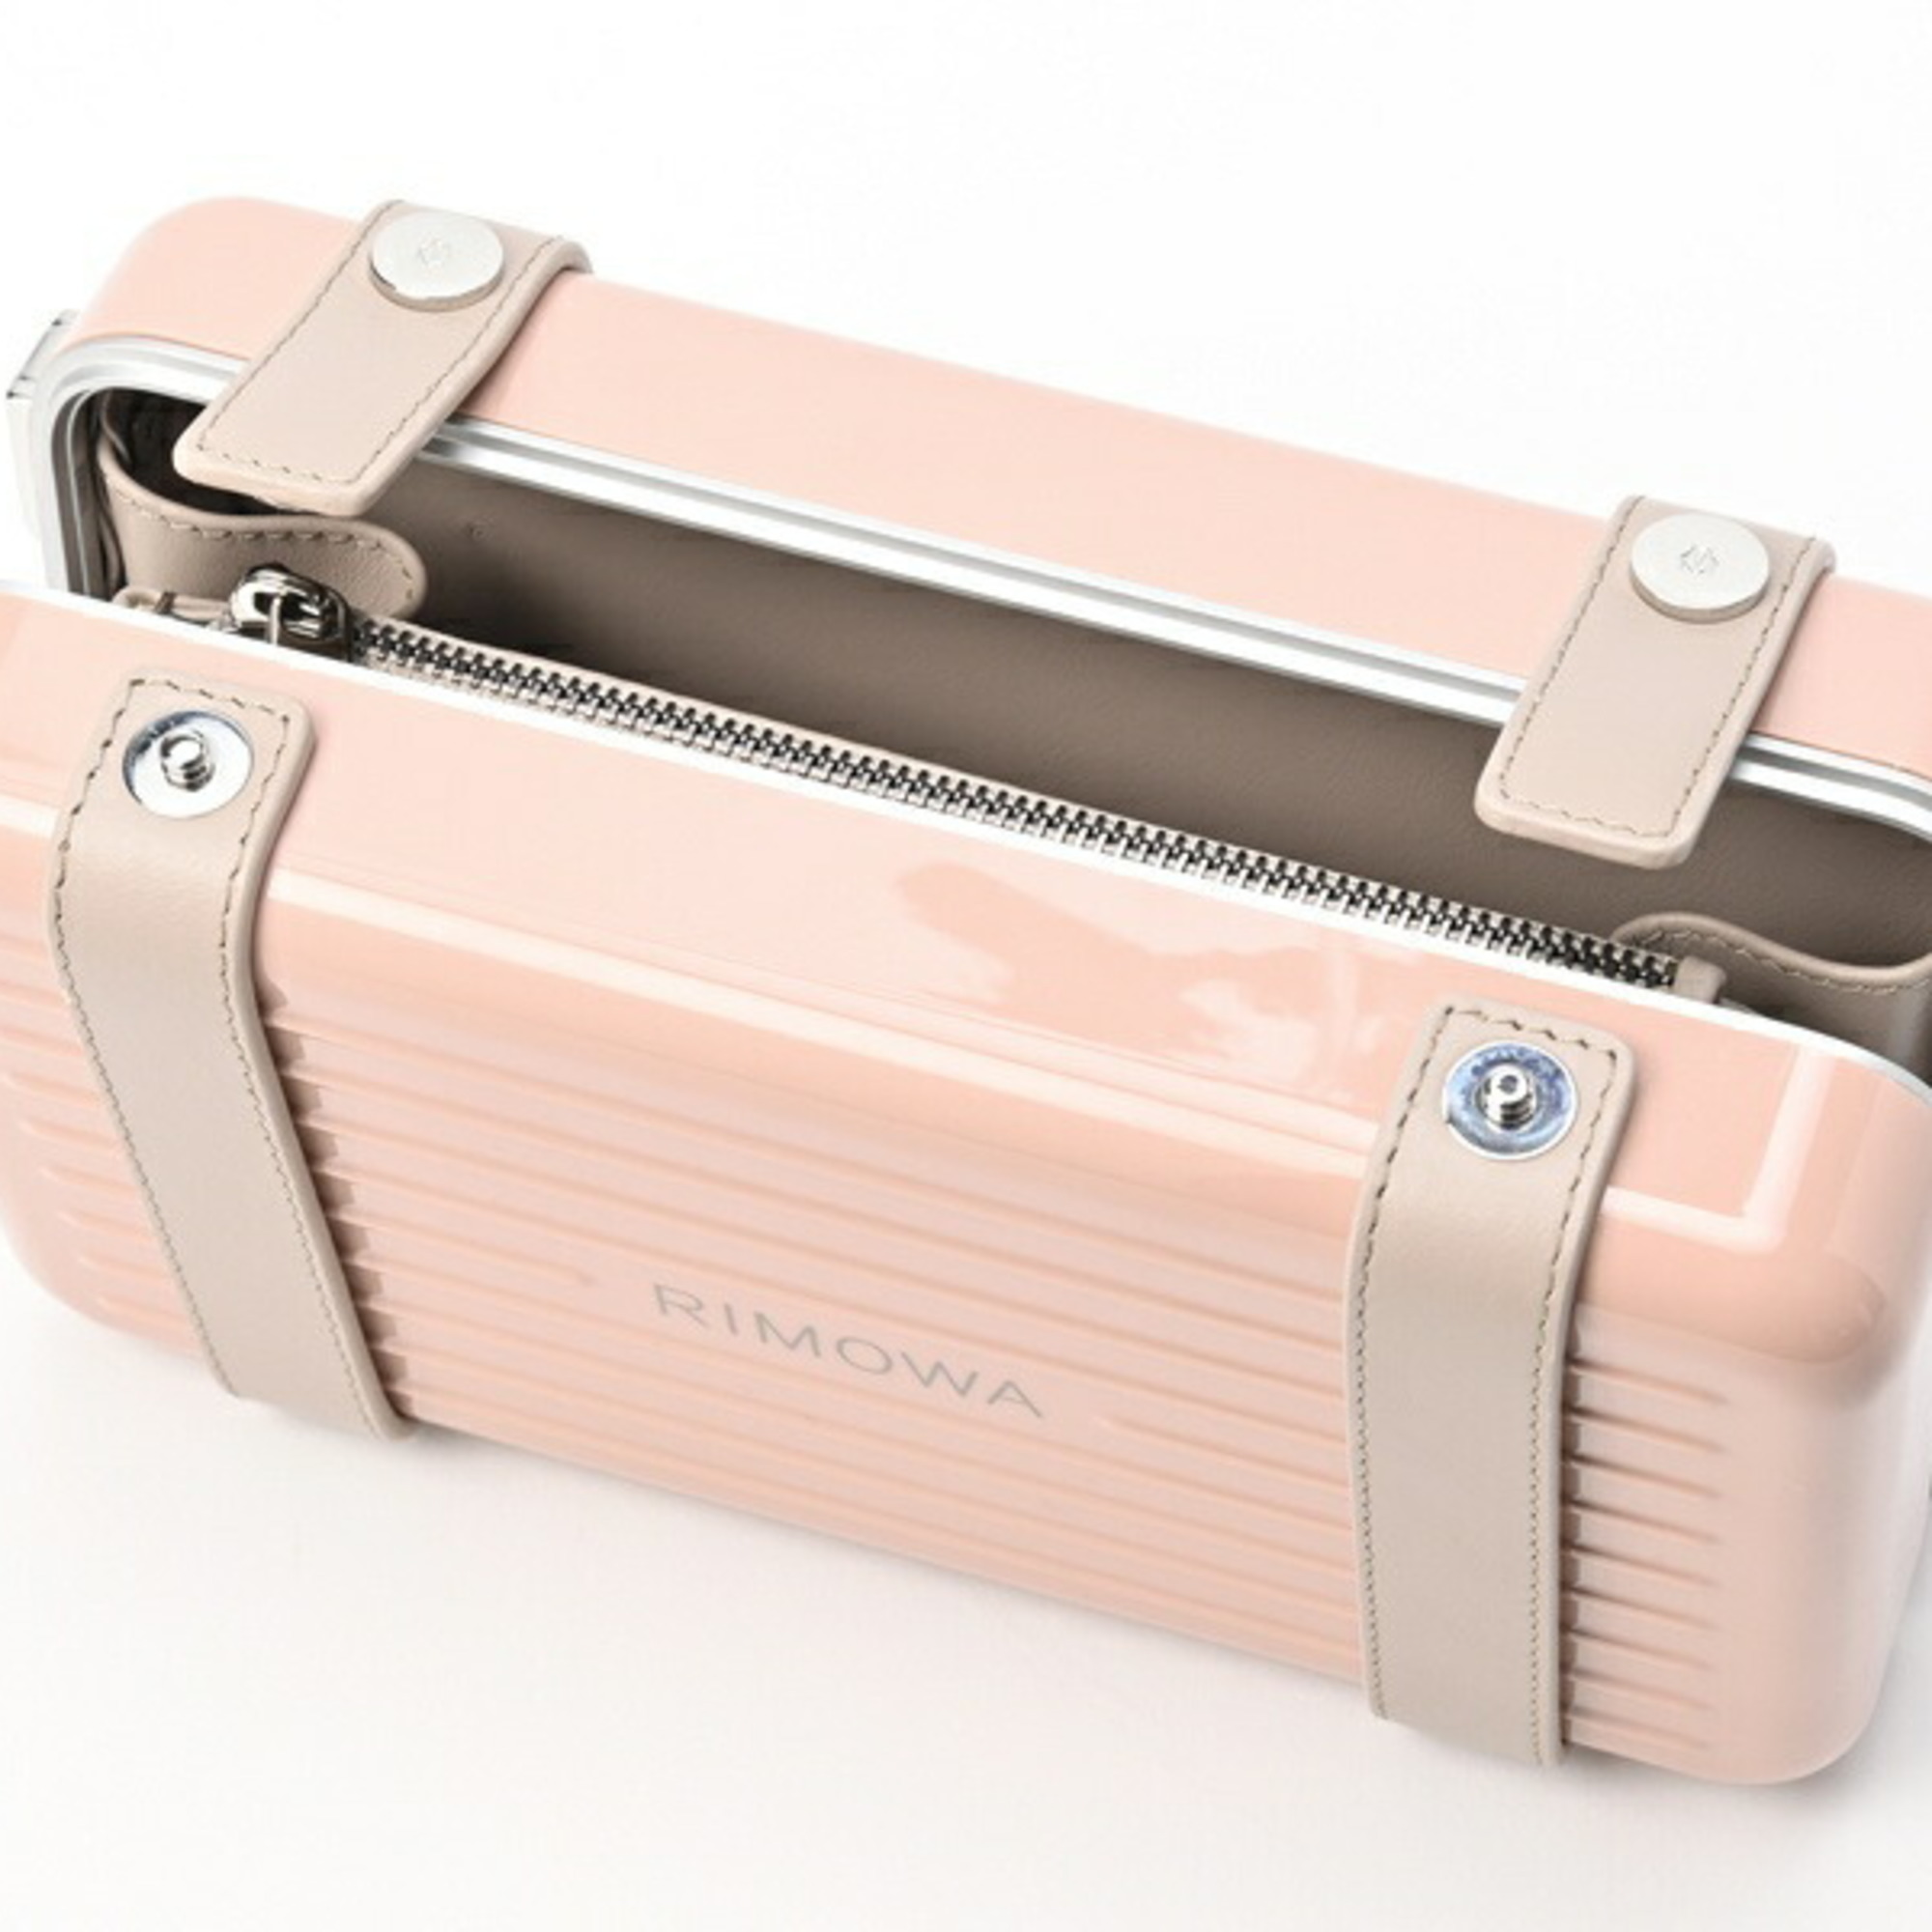 RIMOWA Personal Crossbody Bag 89011900 Pink Beige T-155511